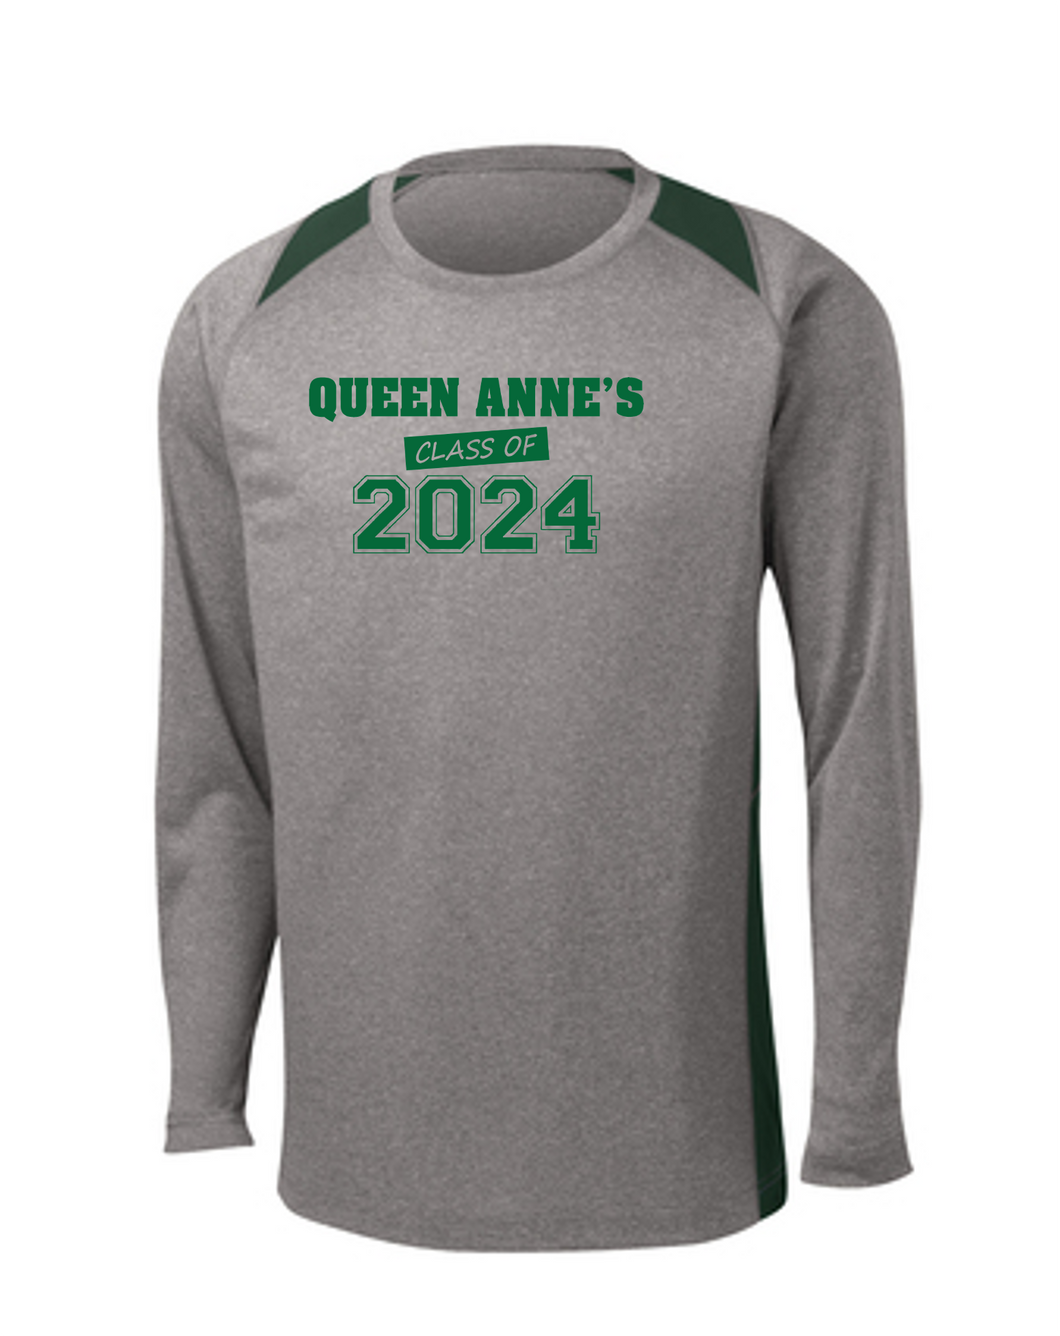 Sport-Tek® Long Sleeve Heather Colorblock Contender™ Tee - Queen Anne’s Class of 2024